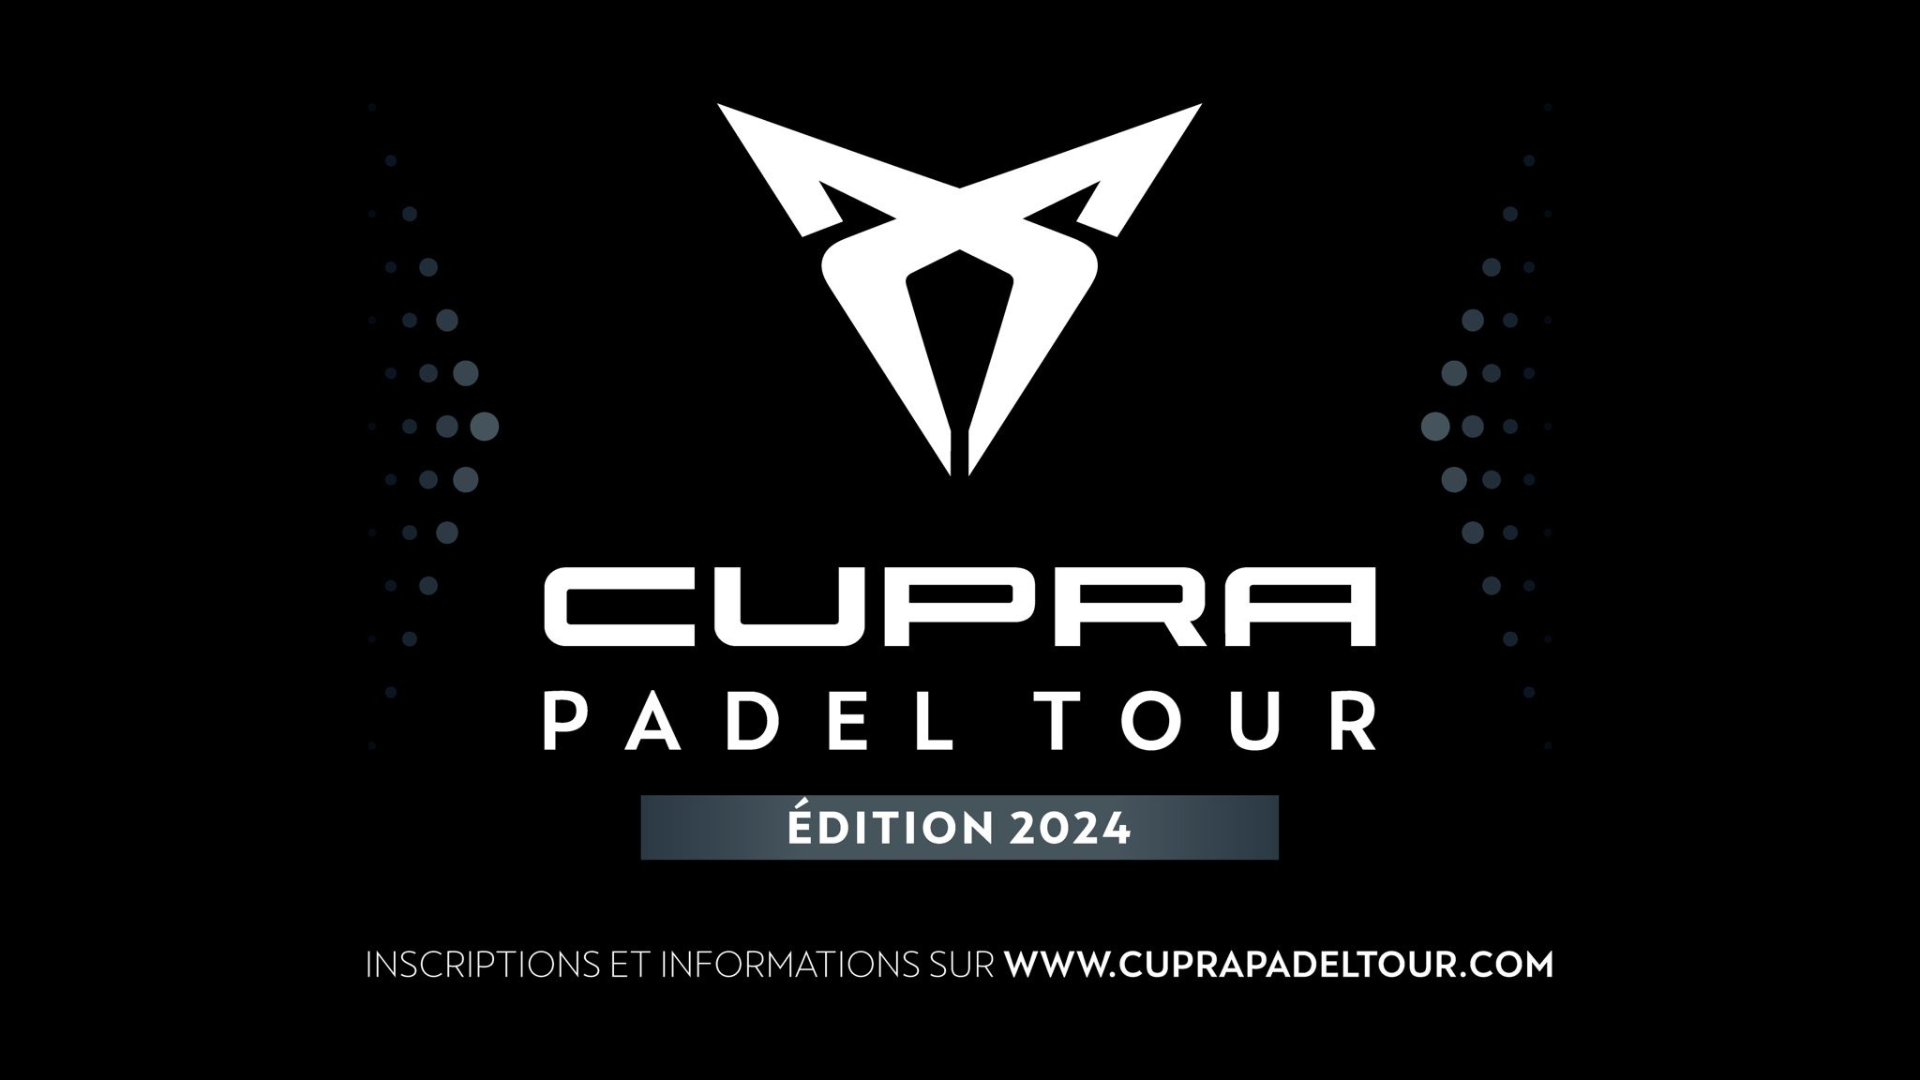 Lancering af CUPRA PADEL TUR 2024